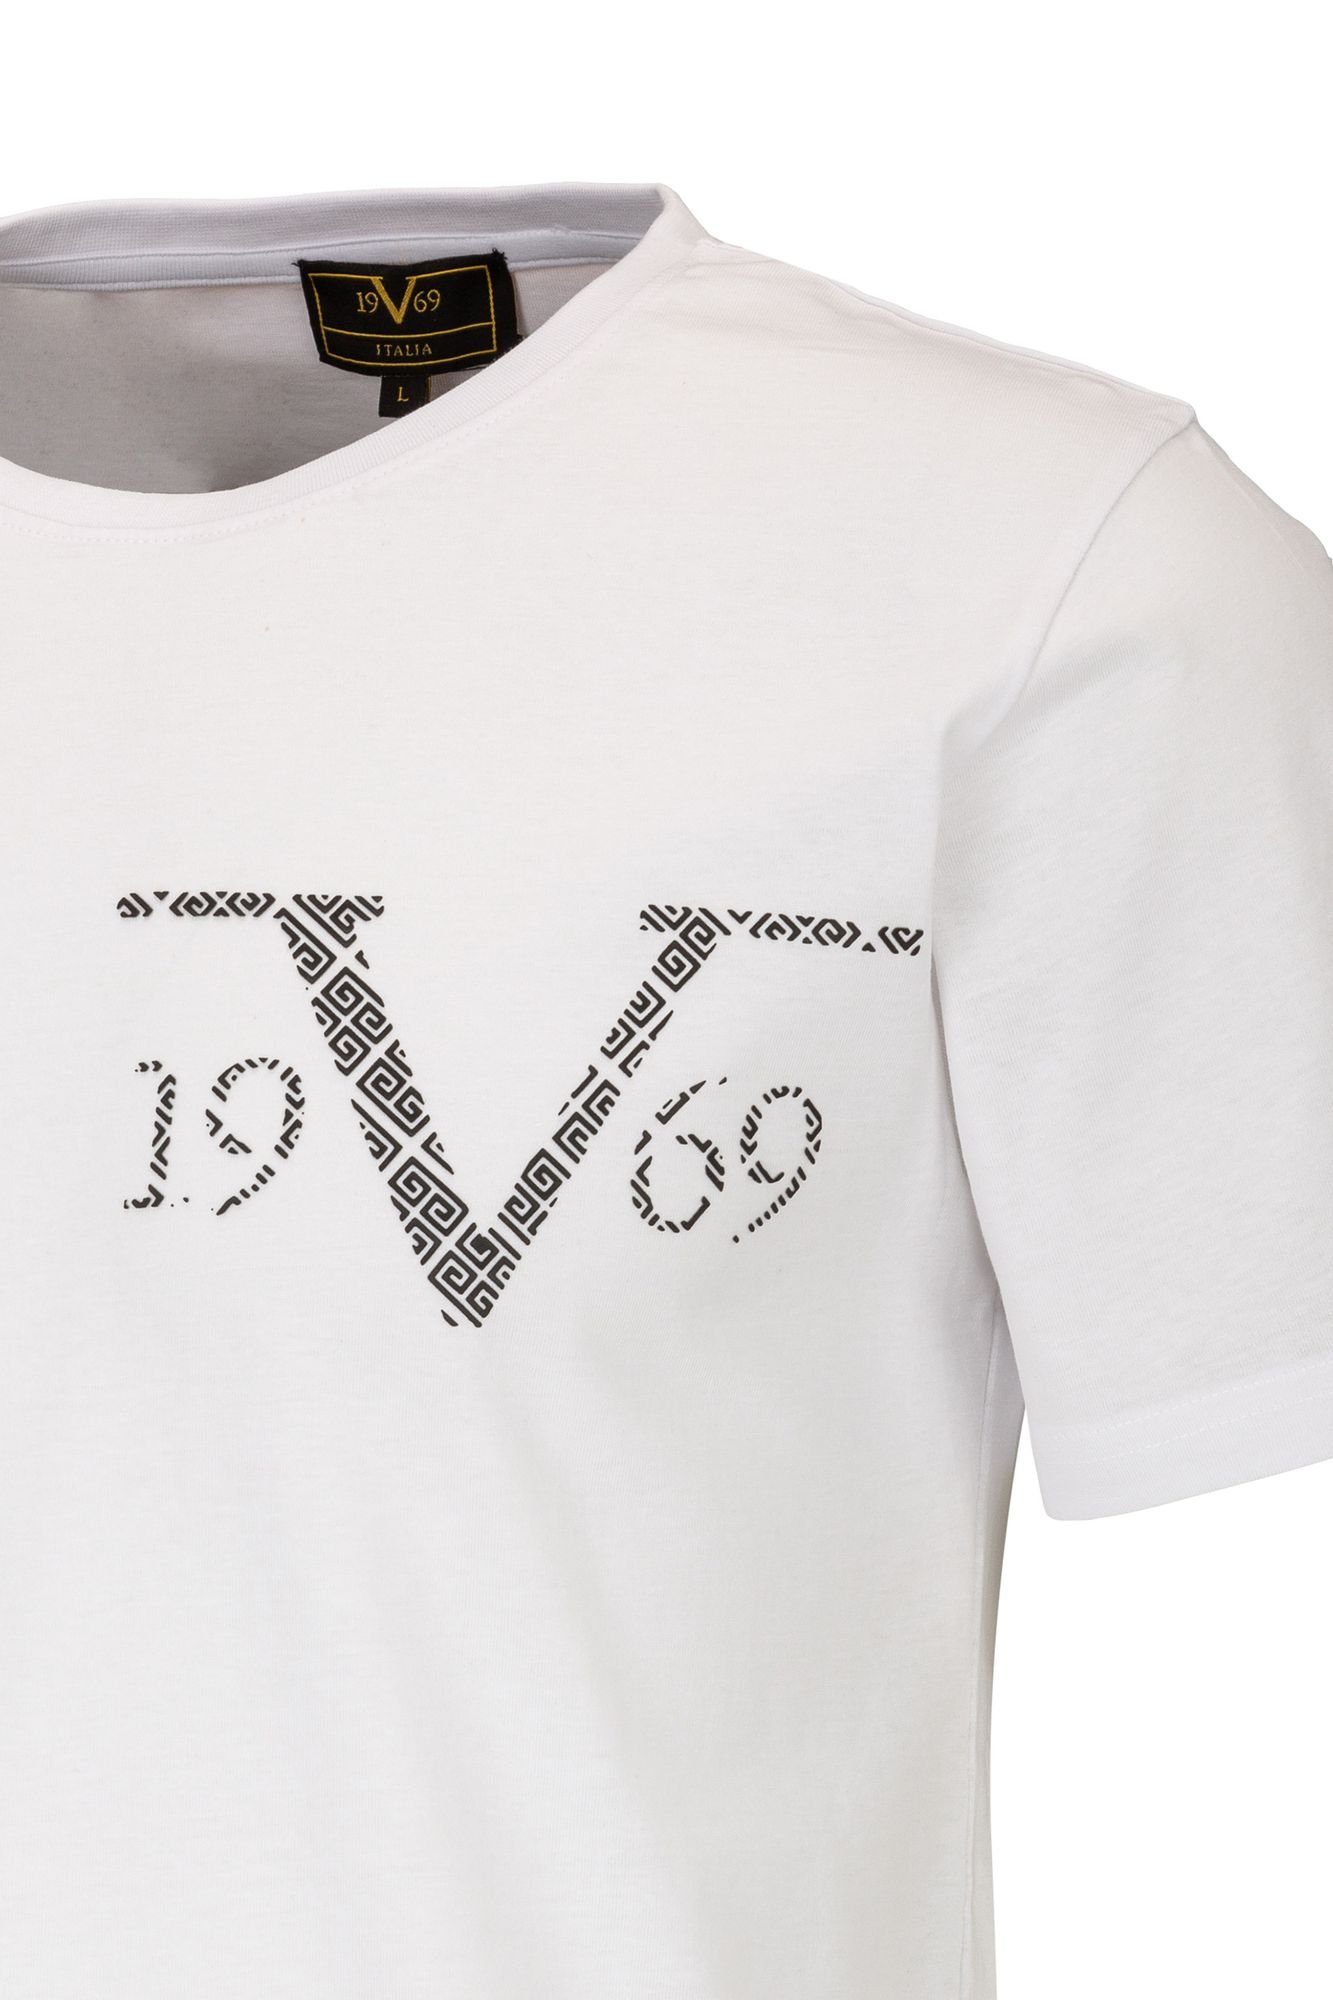 by Italia Versace 19V69 Nicolo T-Shirt